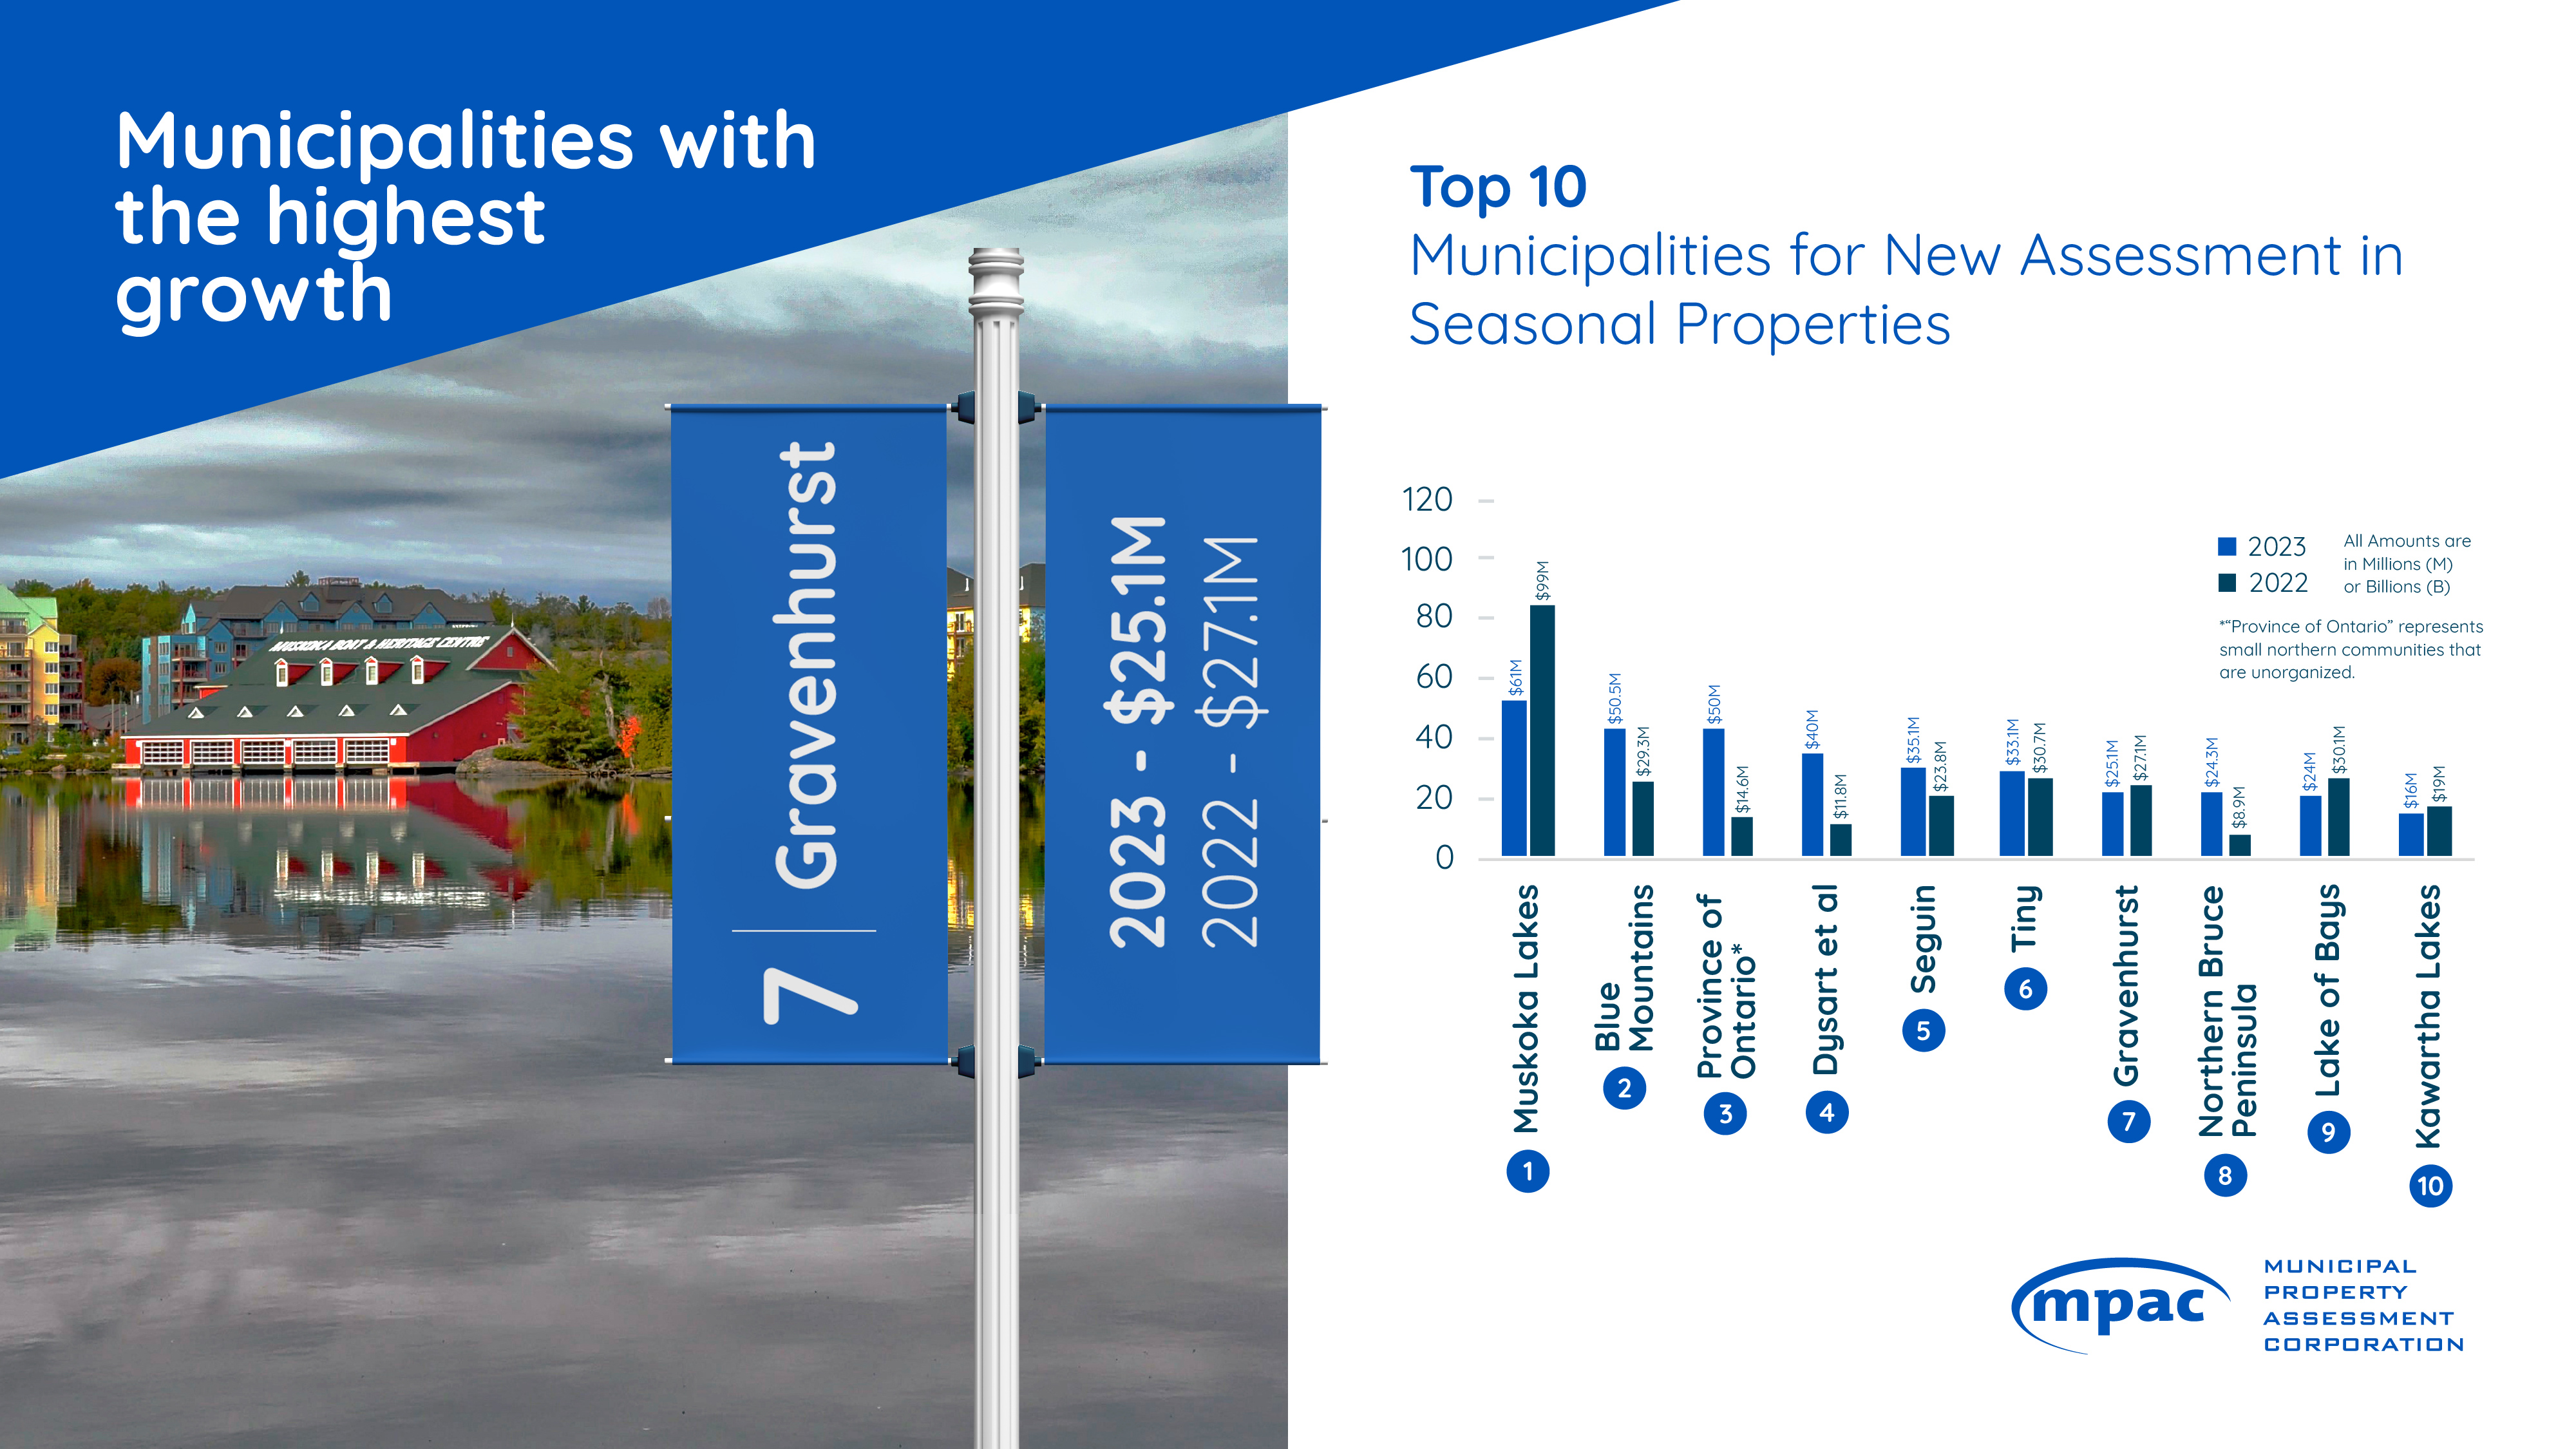 Top 10 Municipalities for New Assessment in Seasonal Properties